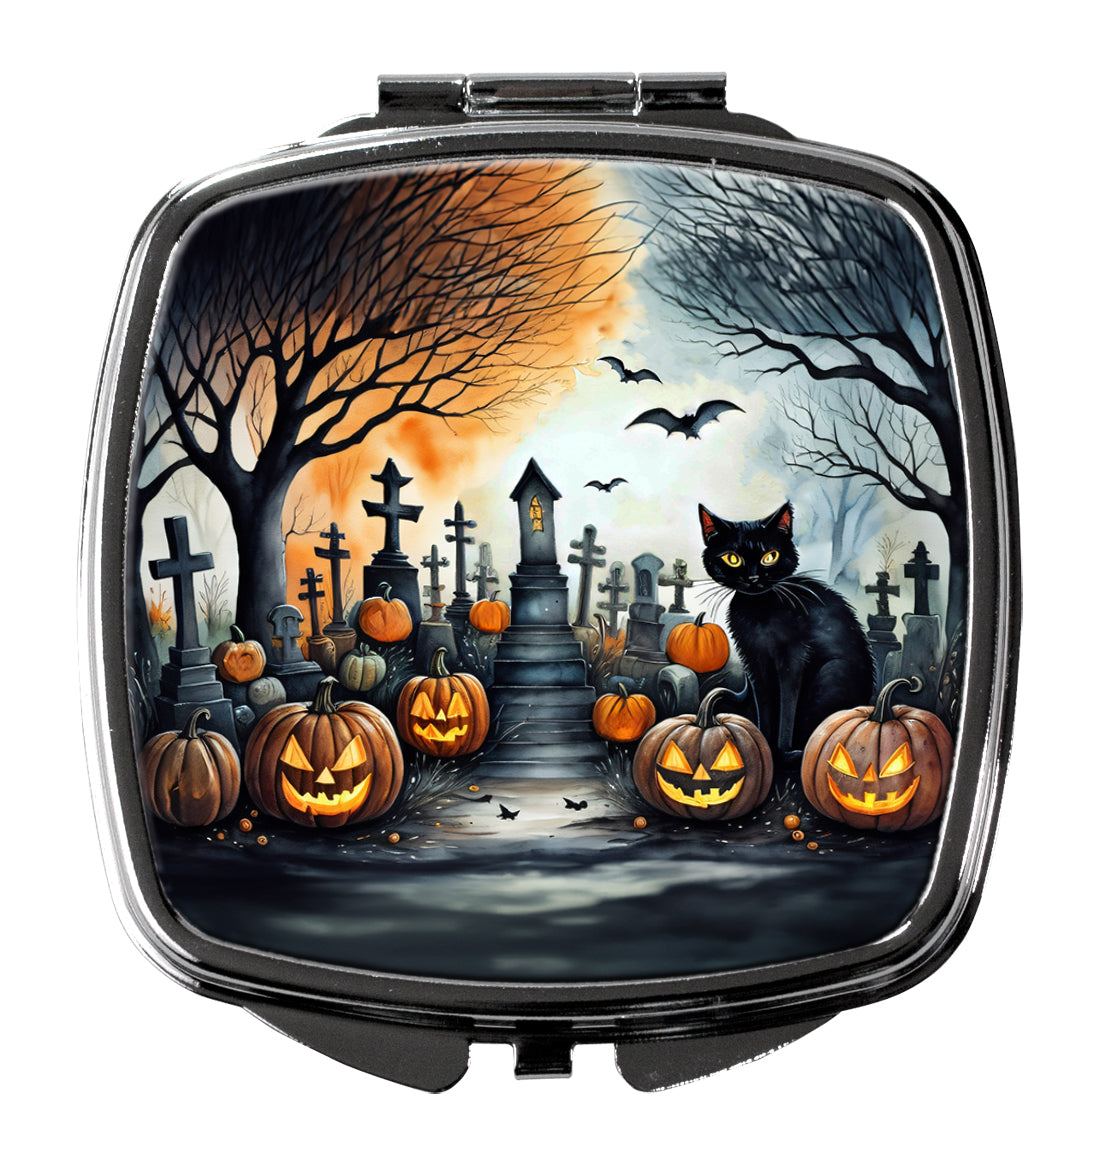 Buy this Black Cat Spooky Halloween Compact Mirror